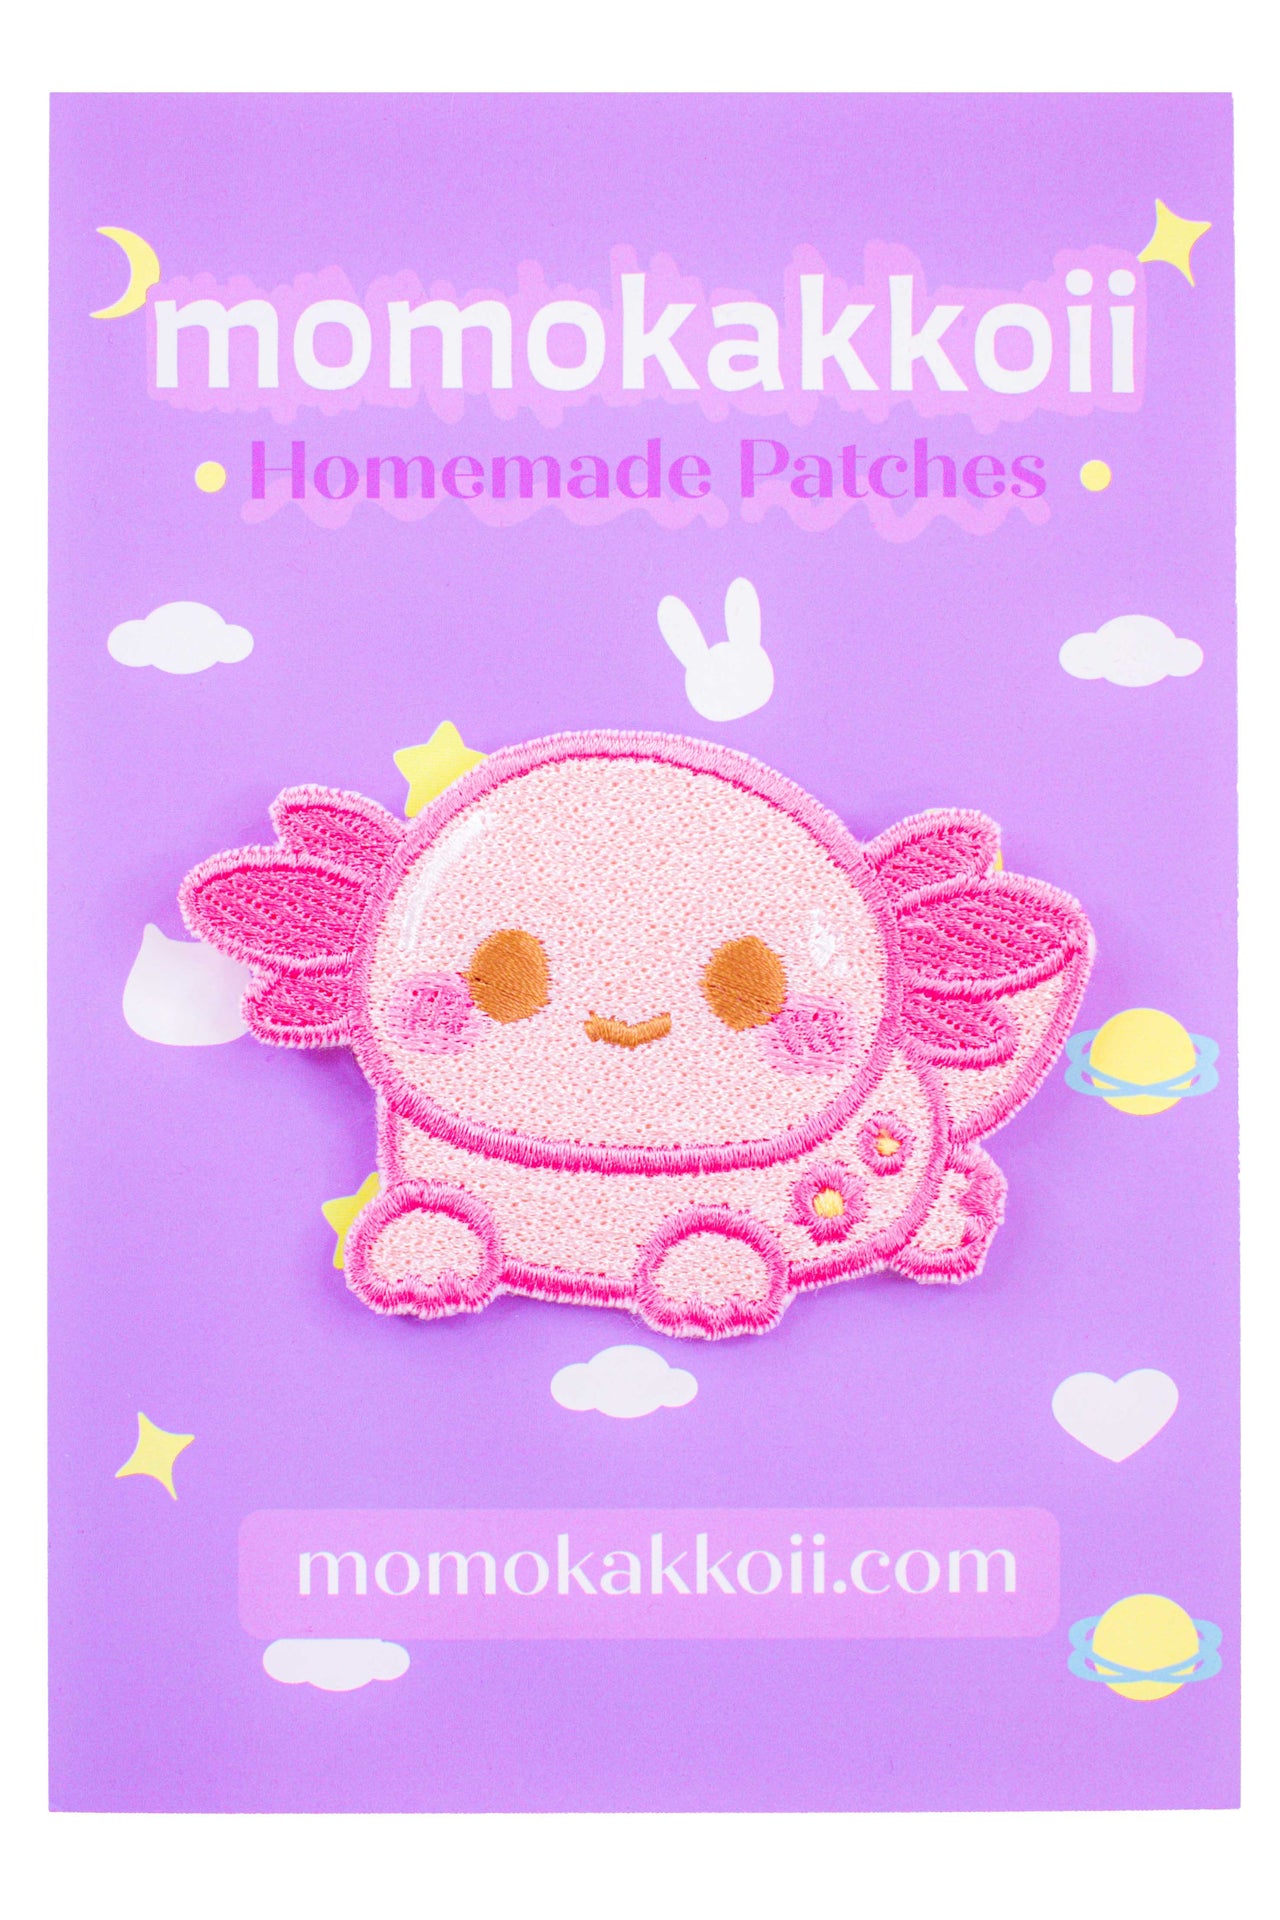 Xoxi The Axolotl Embroidered Patch - Momokakkoii